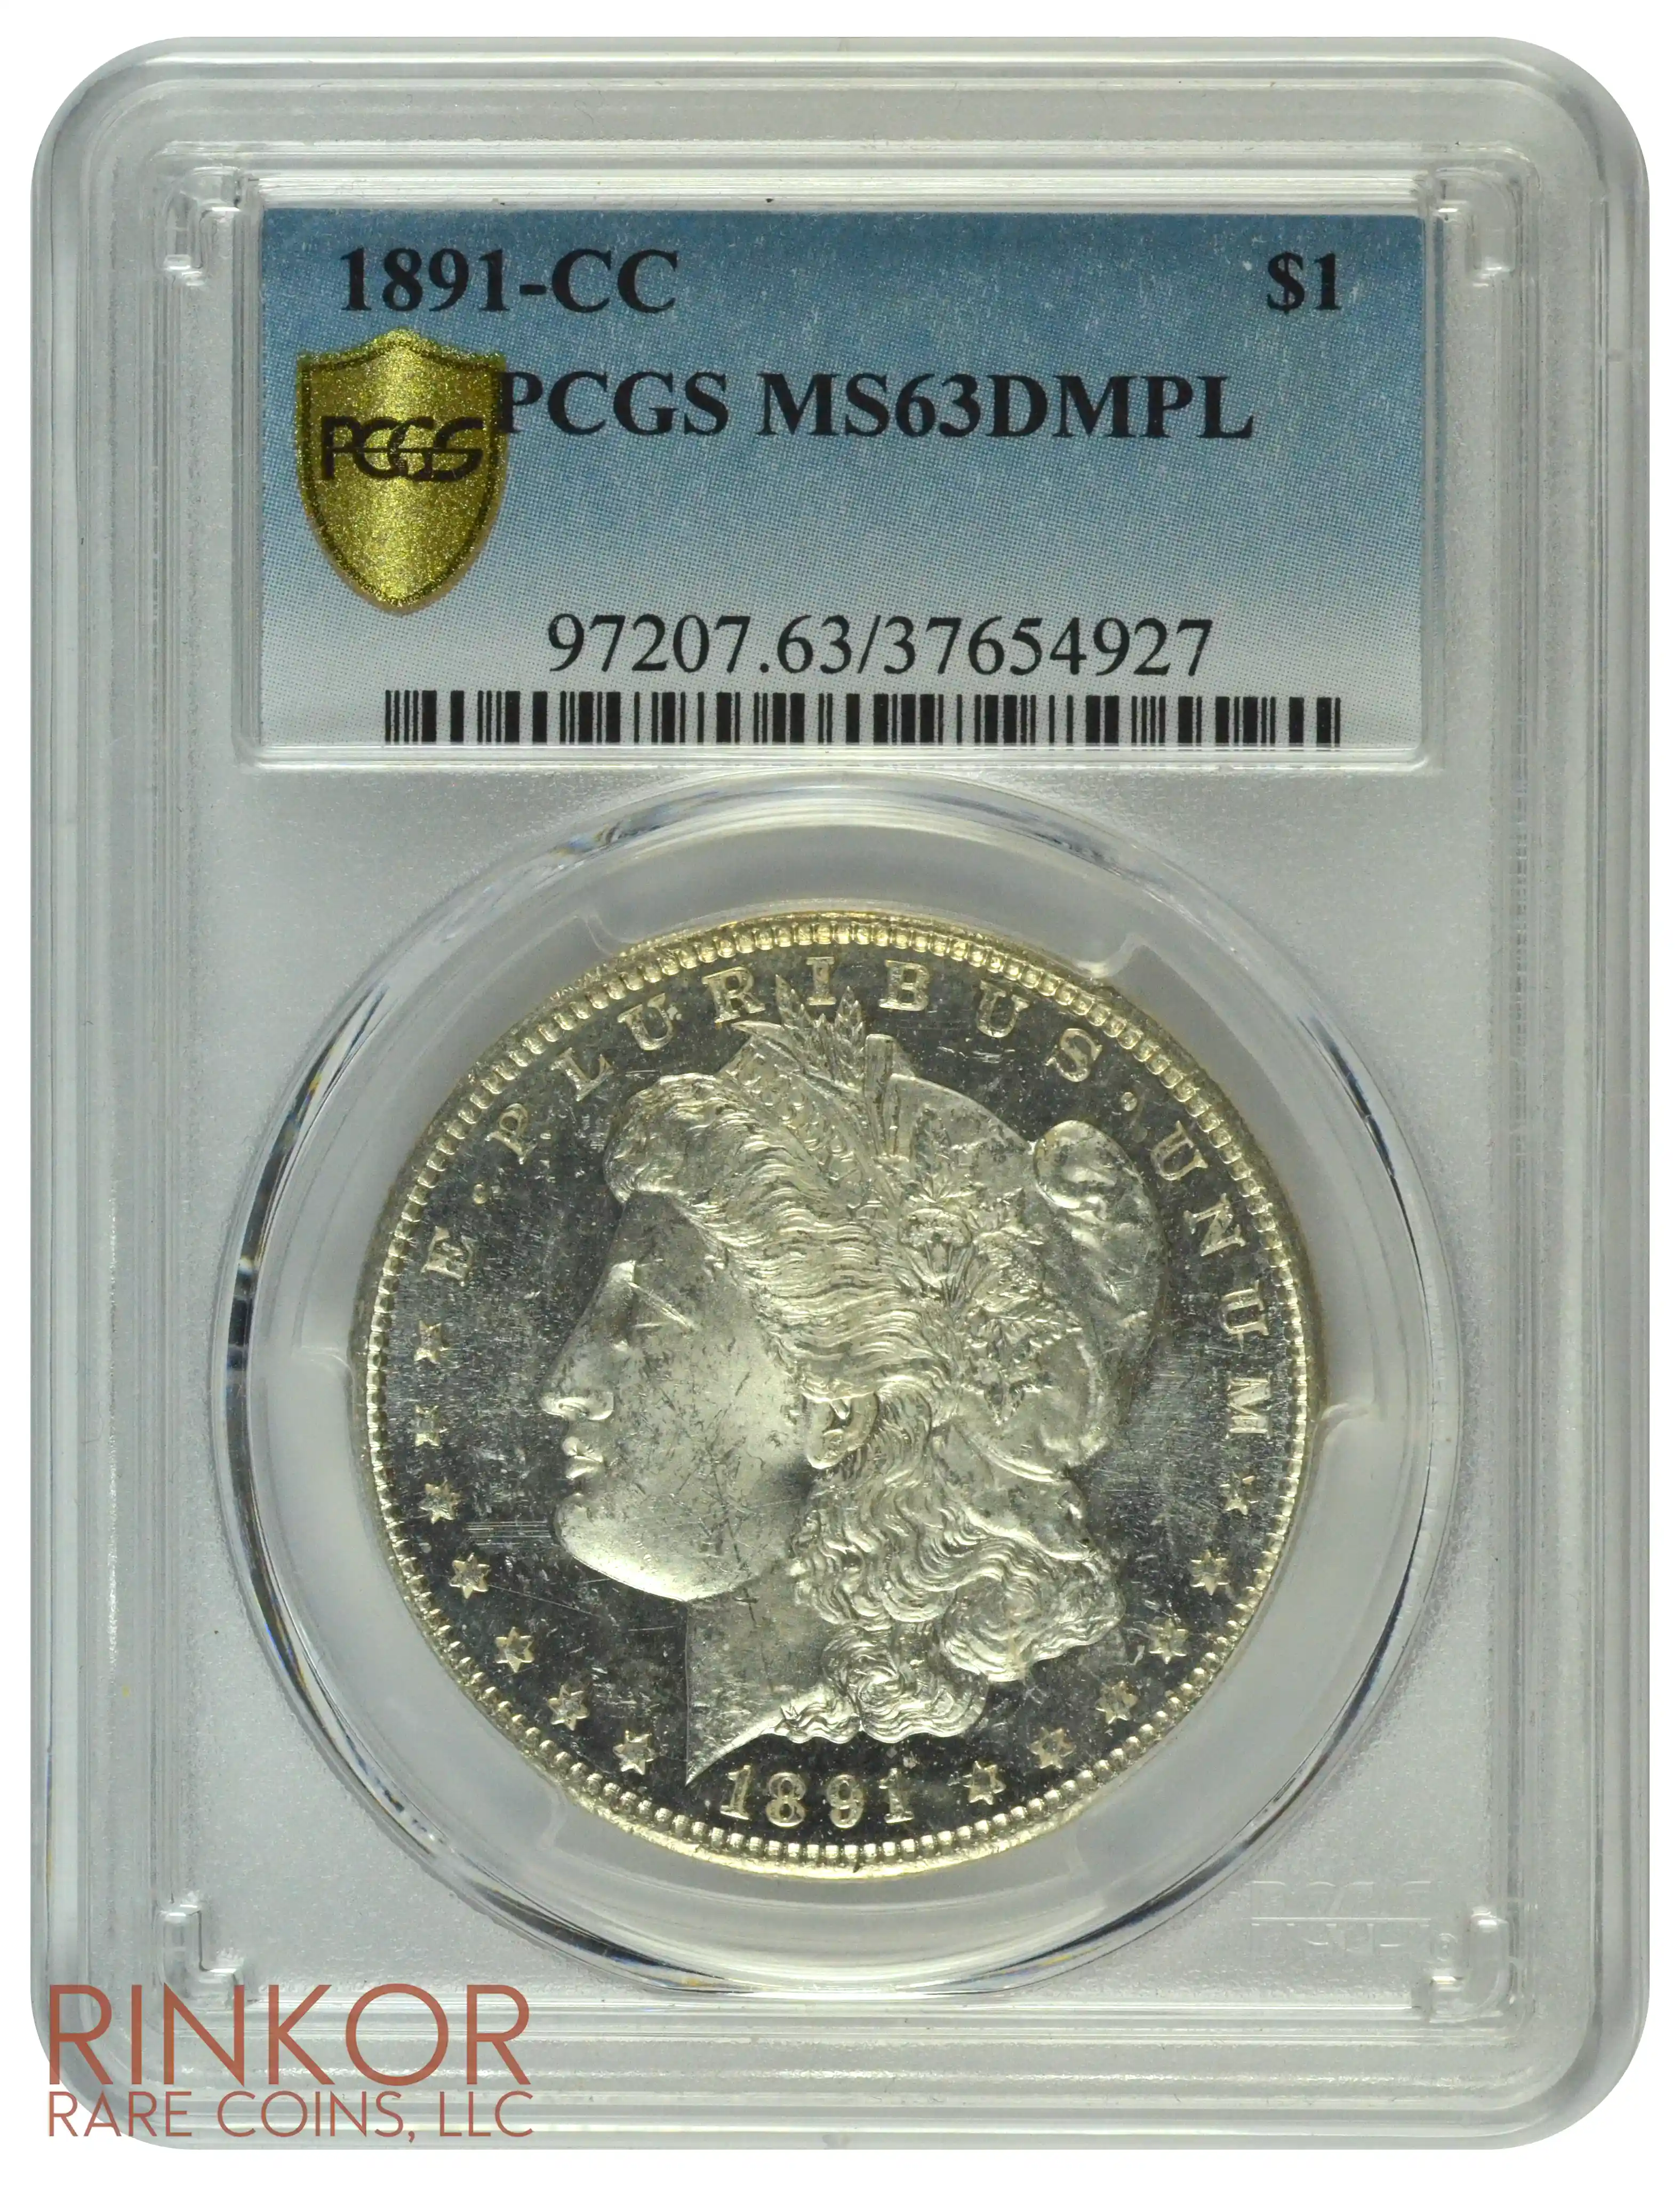 1891-CC $1 PCGS MS 63 DMPL